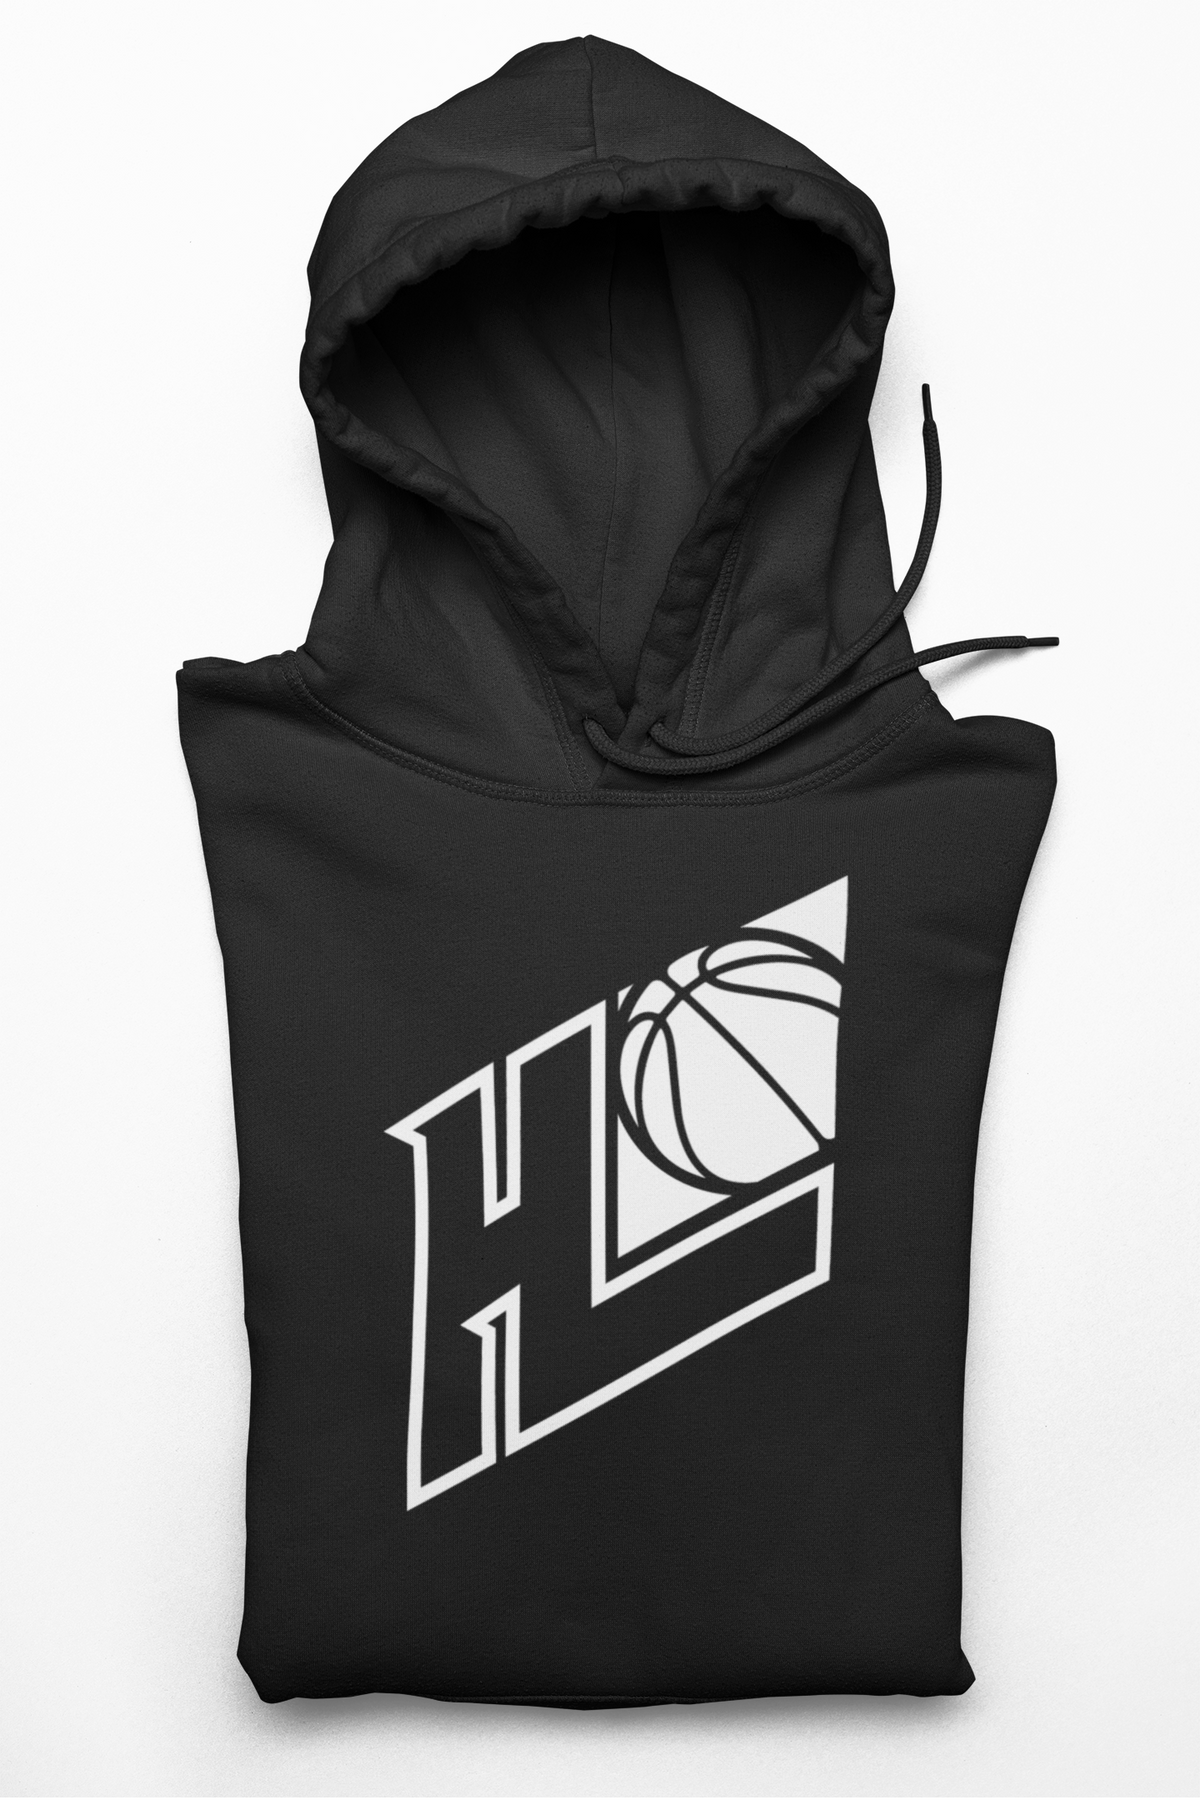 Hoop League Classic pullover hoodie | basketball